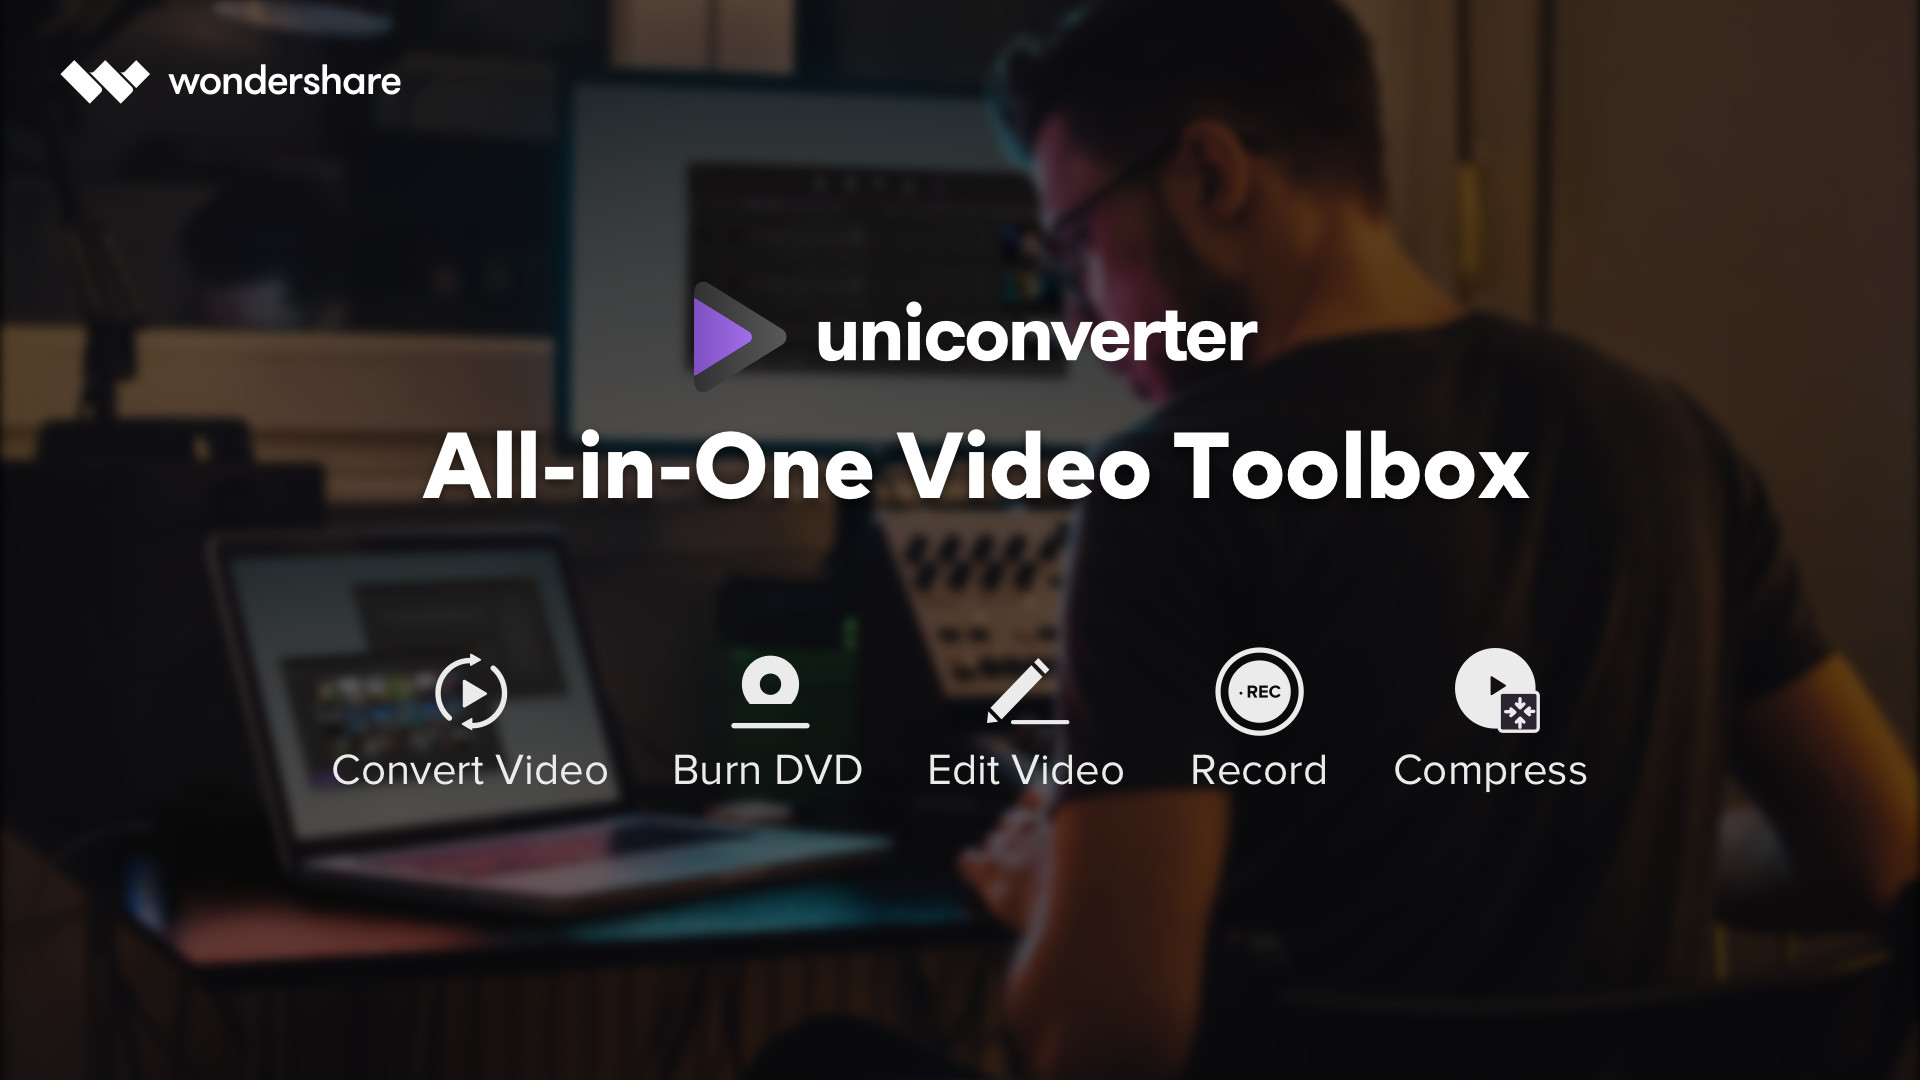 wondershare uniconverter video editor